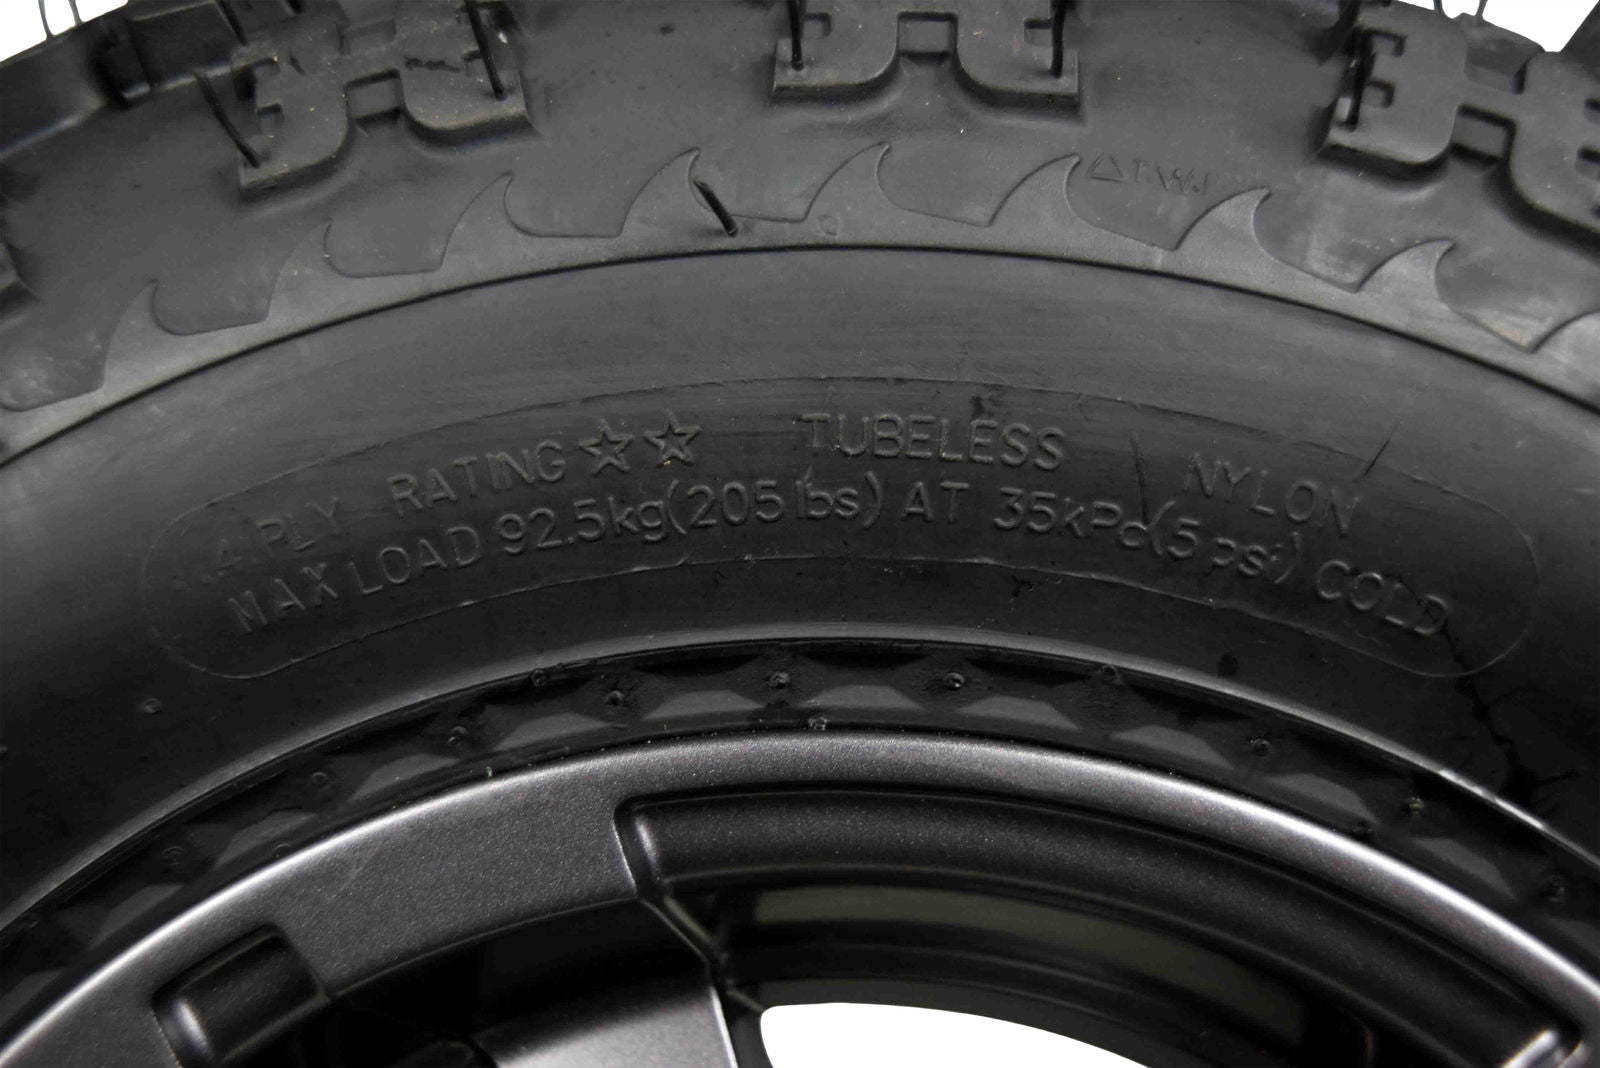 MASSFX 21x7-10 ATV Front Tire & 10x5 4/156 Gun Metal Wheel Kit 21x7x10 (2 Pack)